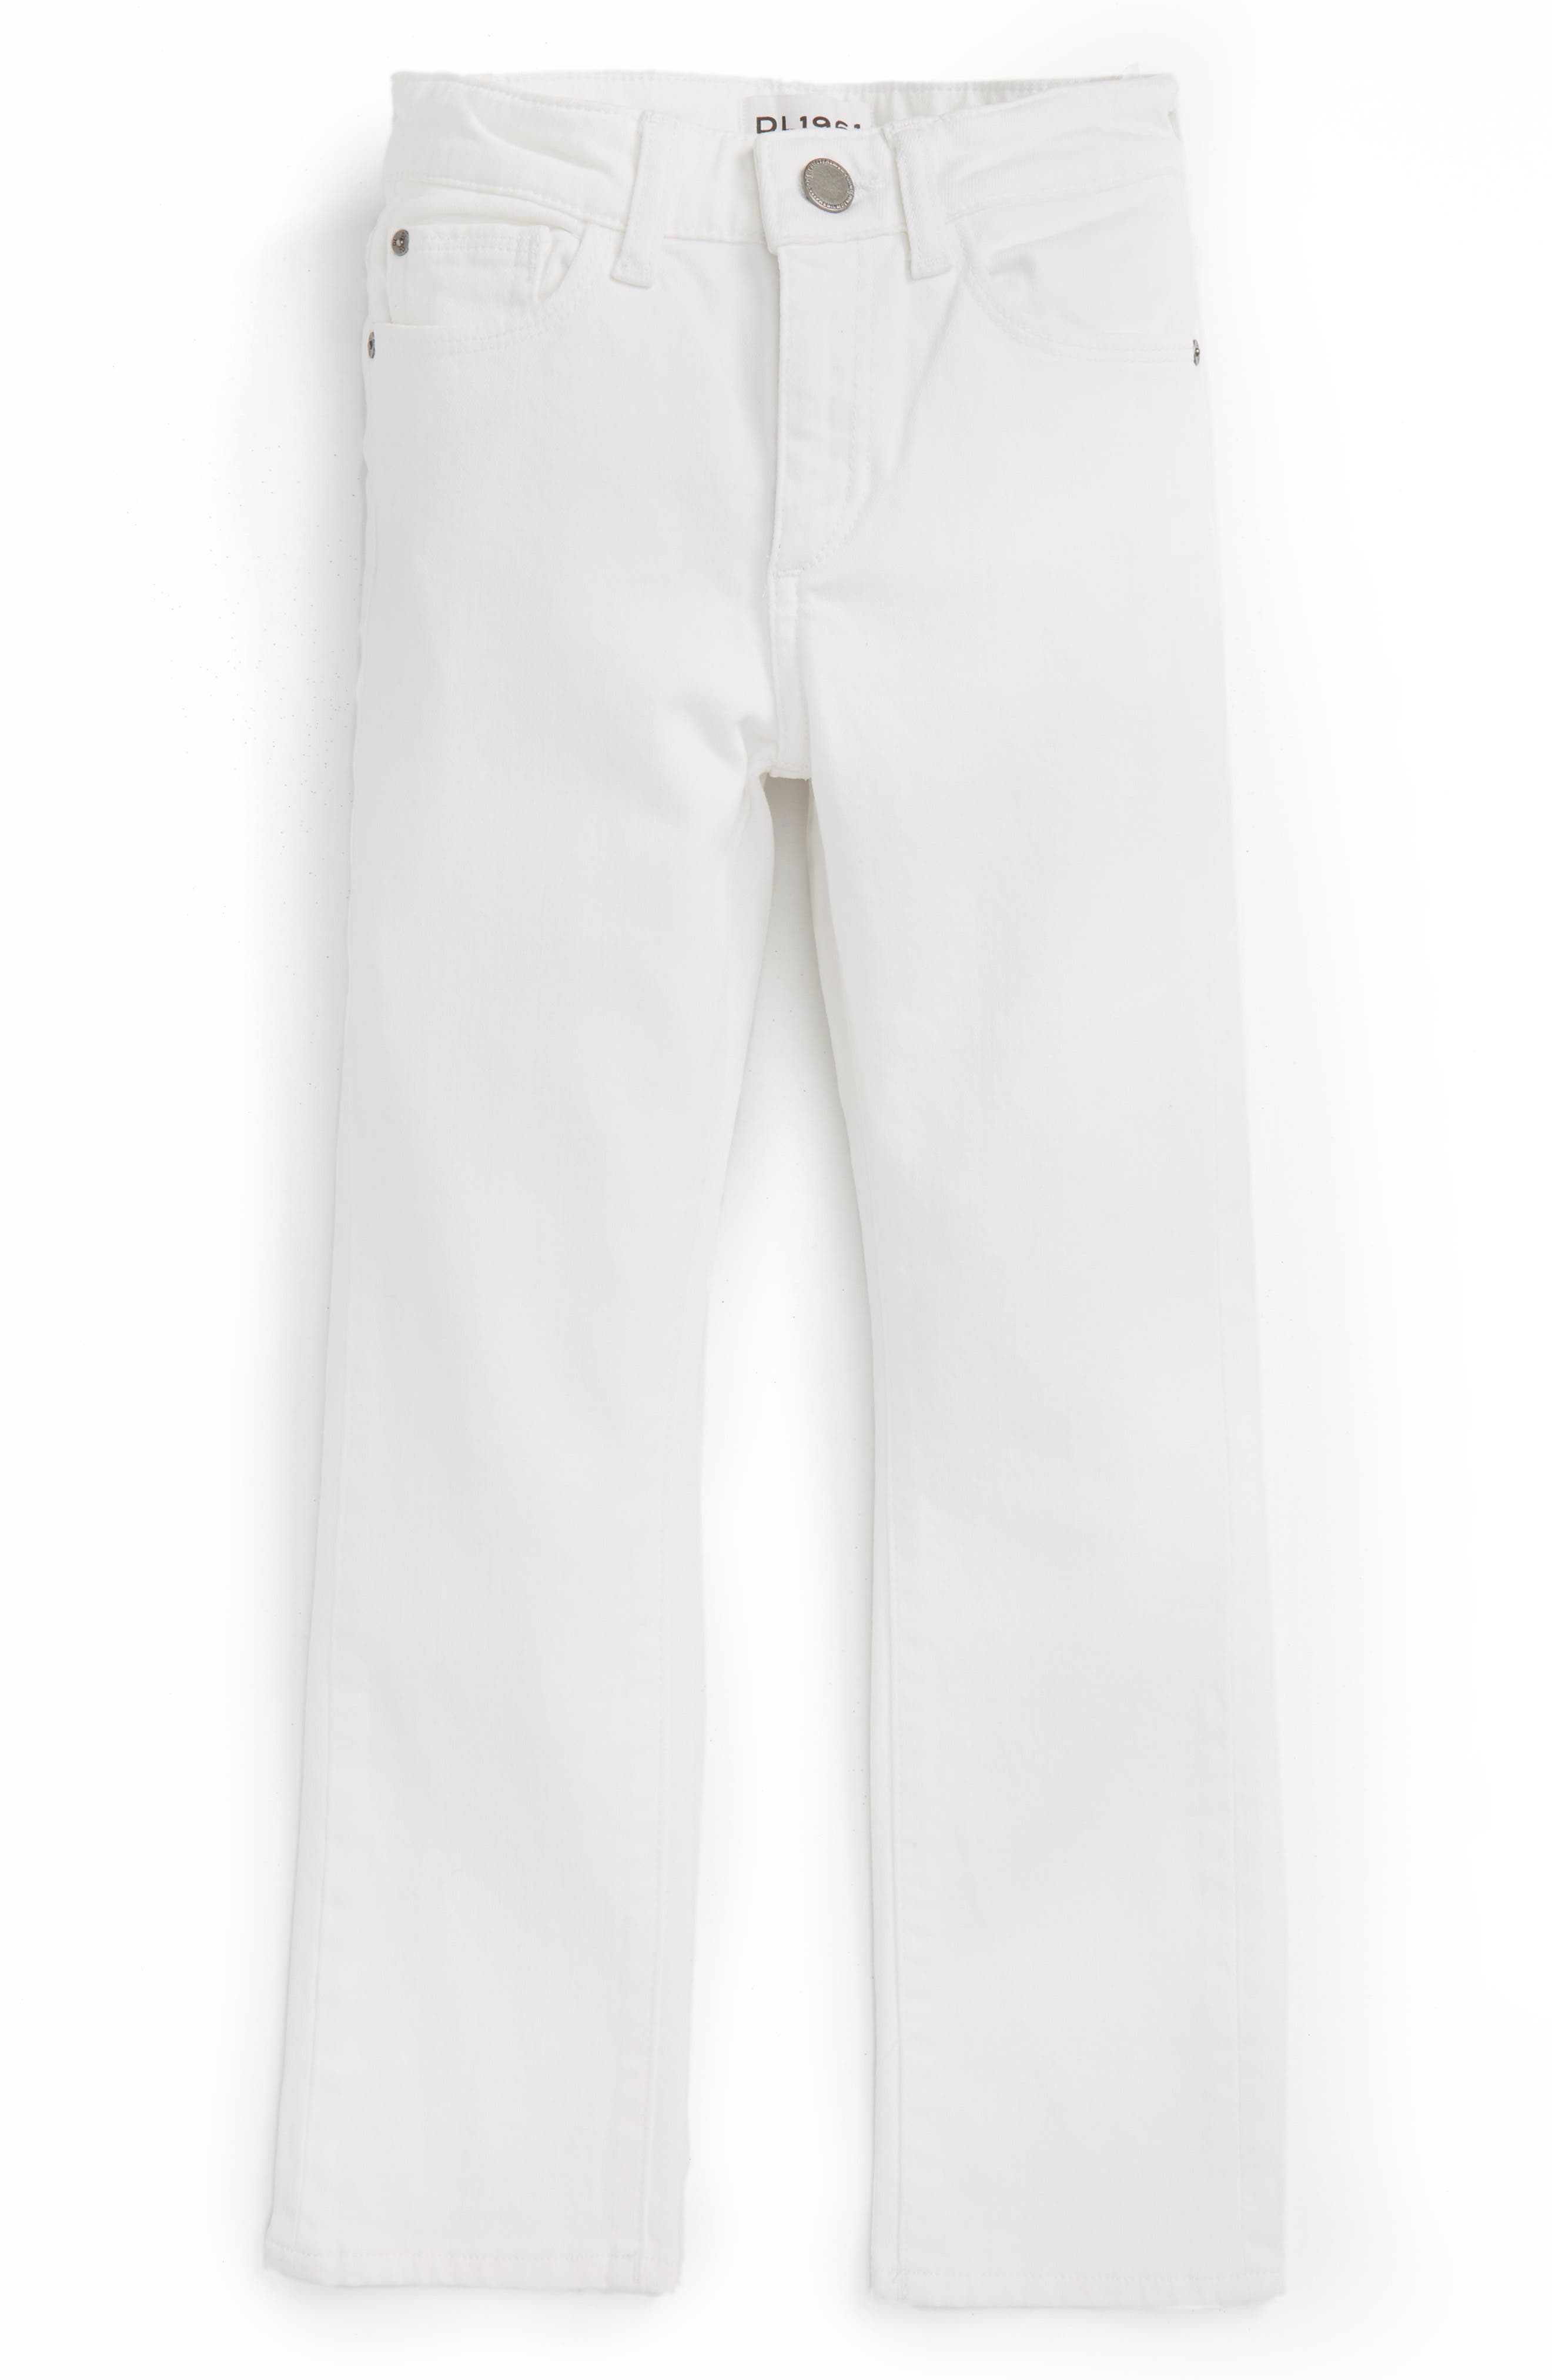 boys white jeans size 8